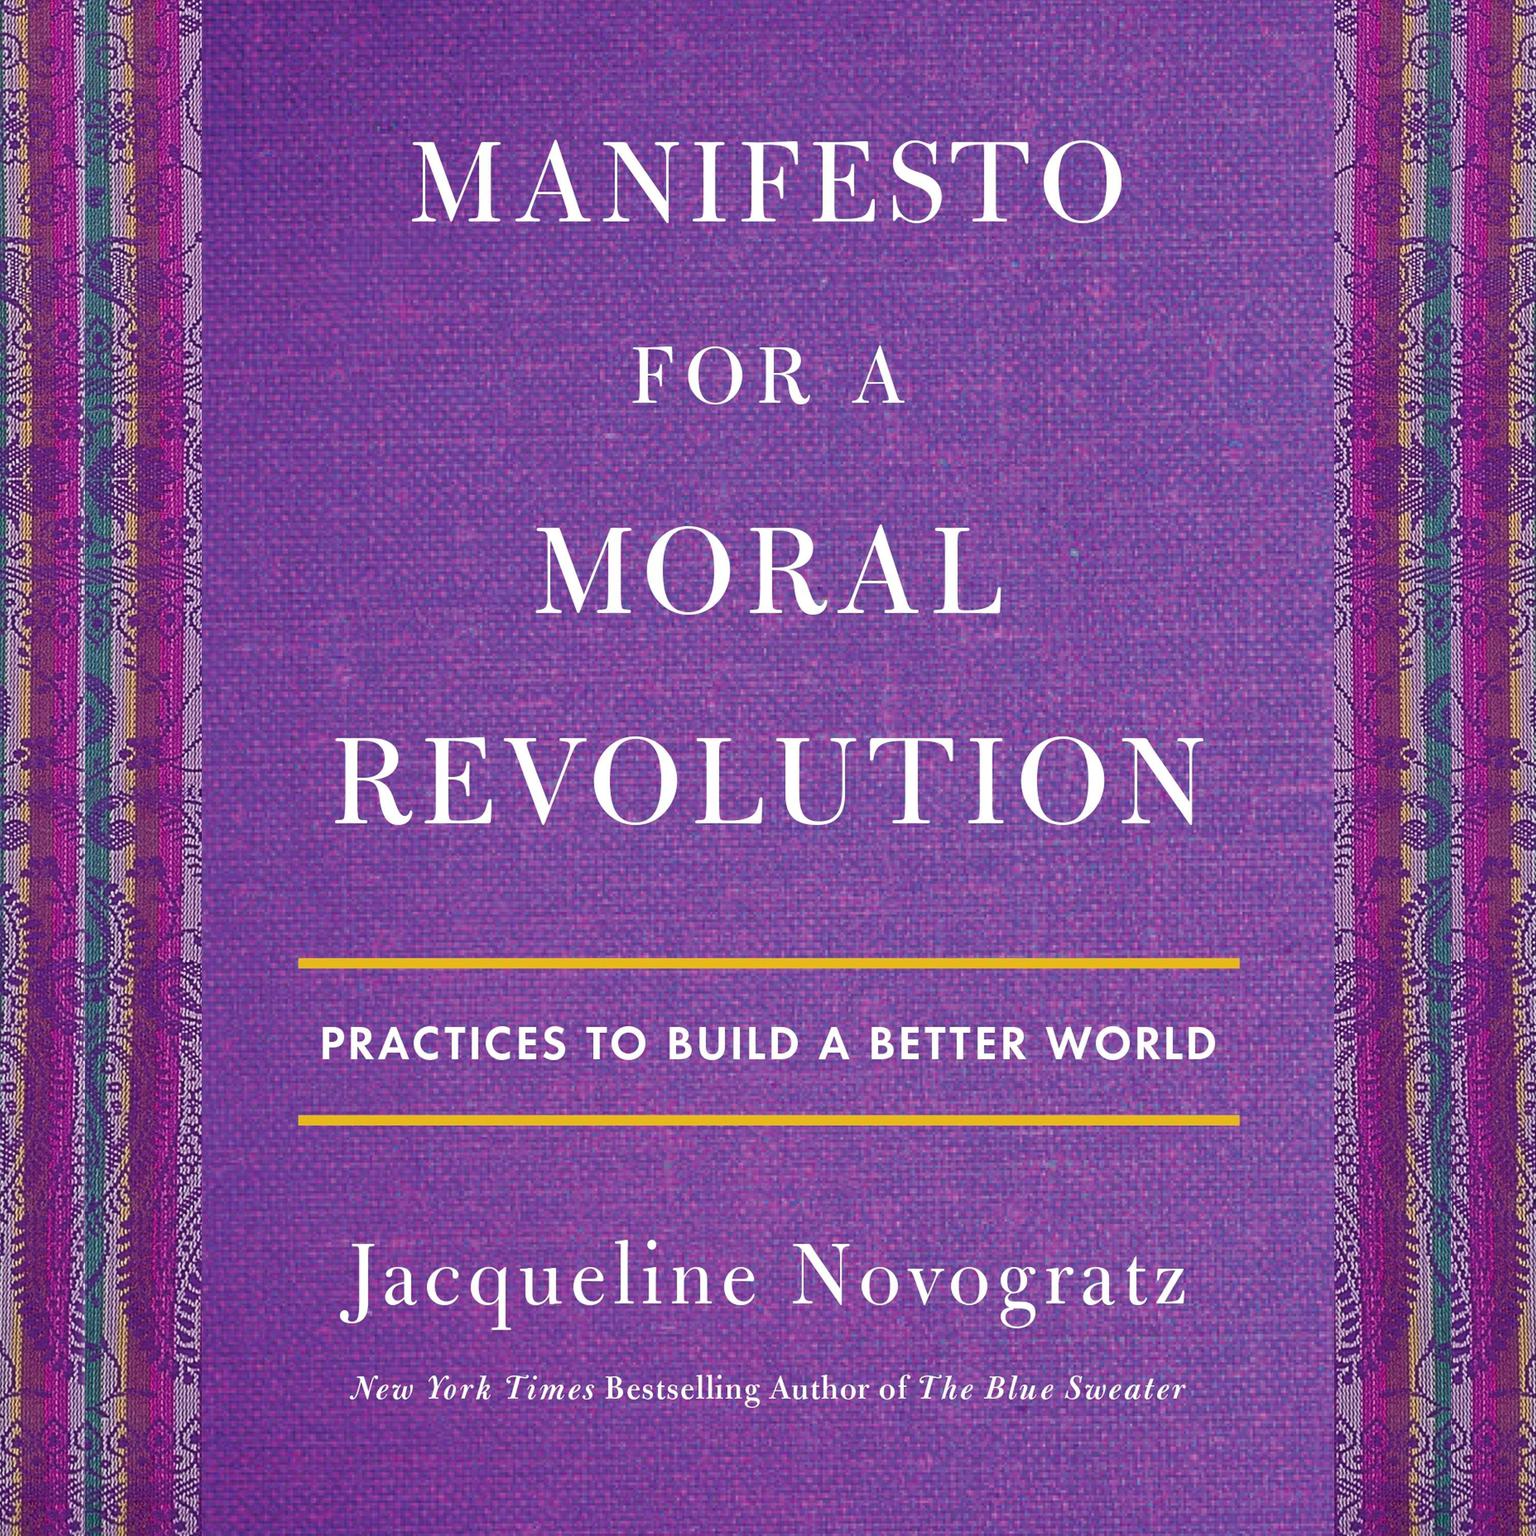 Manifesto for a Moral Revolution: Practices to Build a Better World Audiobook, by Jacqueline Novogratz